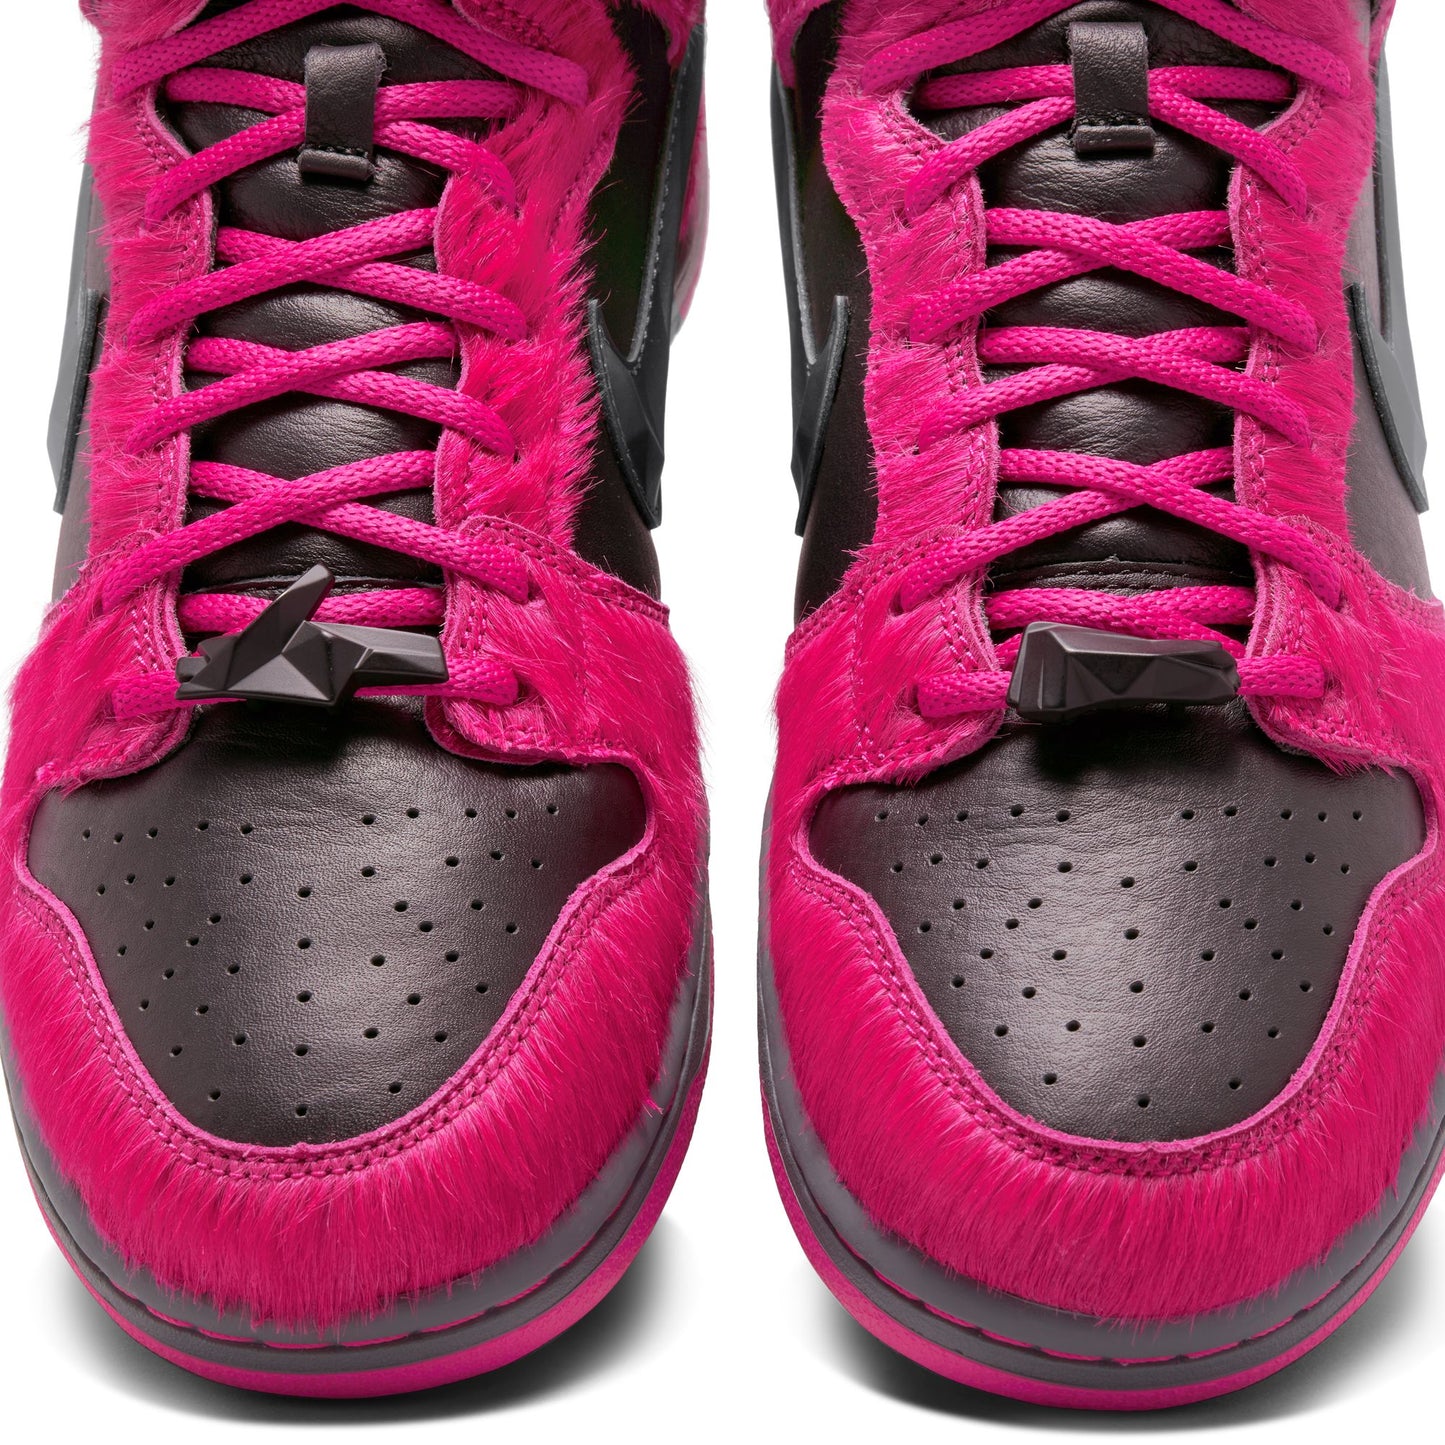 Nike SB Dunk High QS "Run The Jewels" active pink black metallic gold